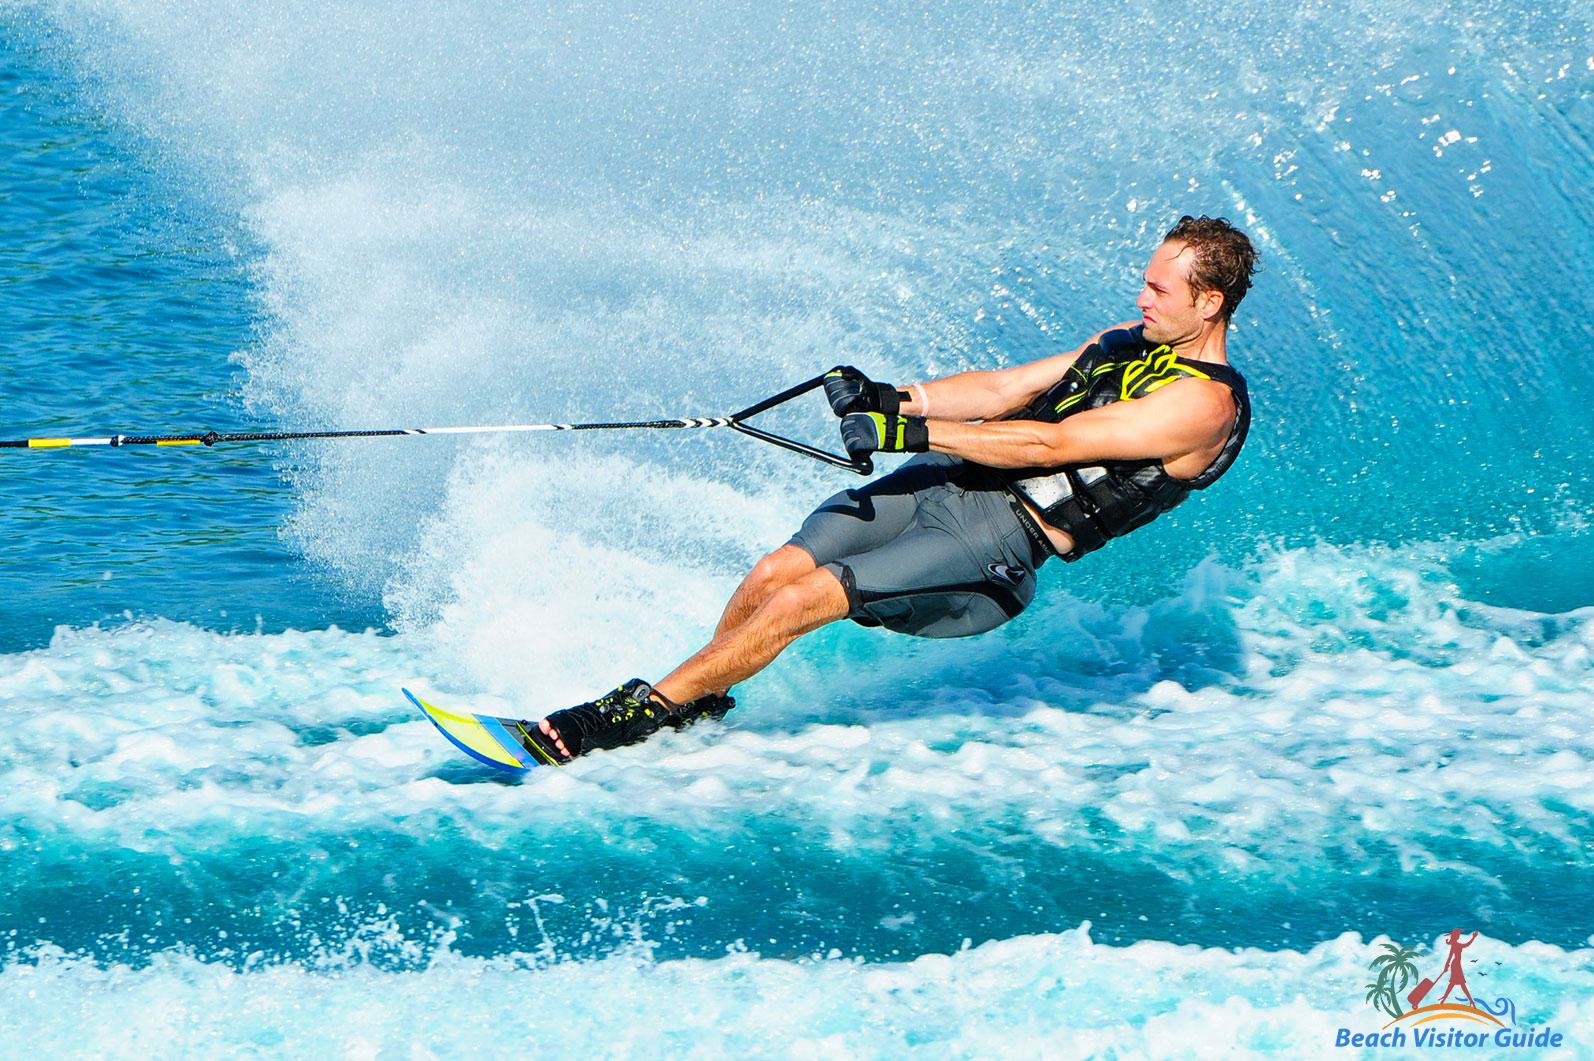 Do water sports. Ральф Самуэльсон водные лыжи. Водные лыжи. Водные лыжи вид спорта. Человек на водных лыжах.